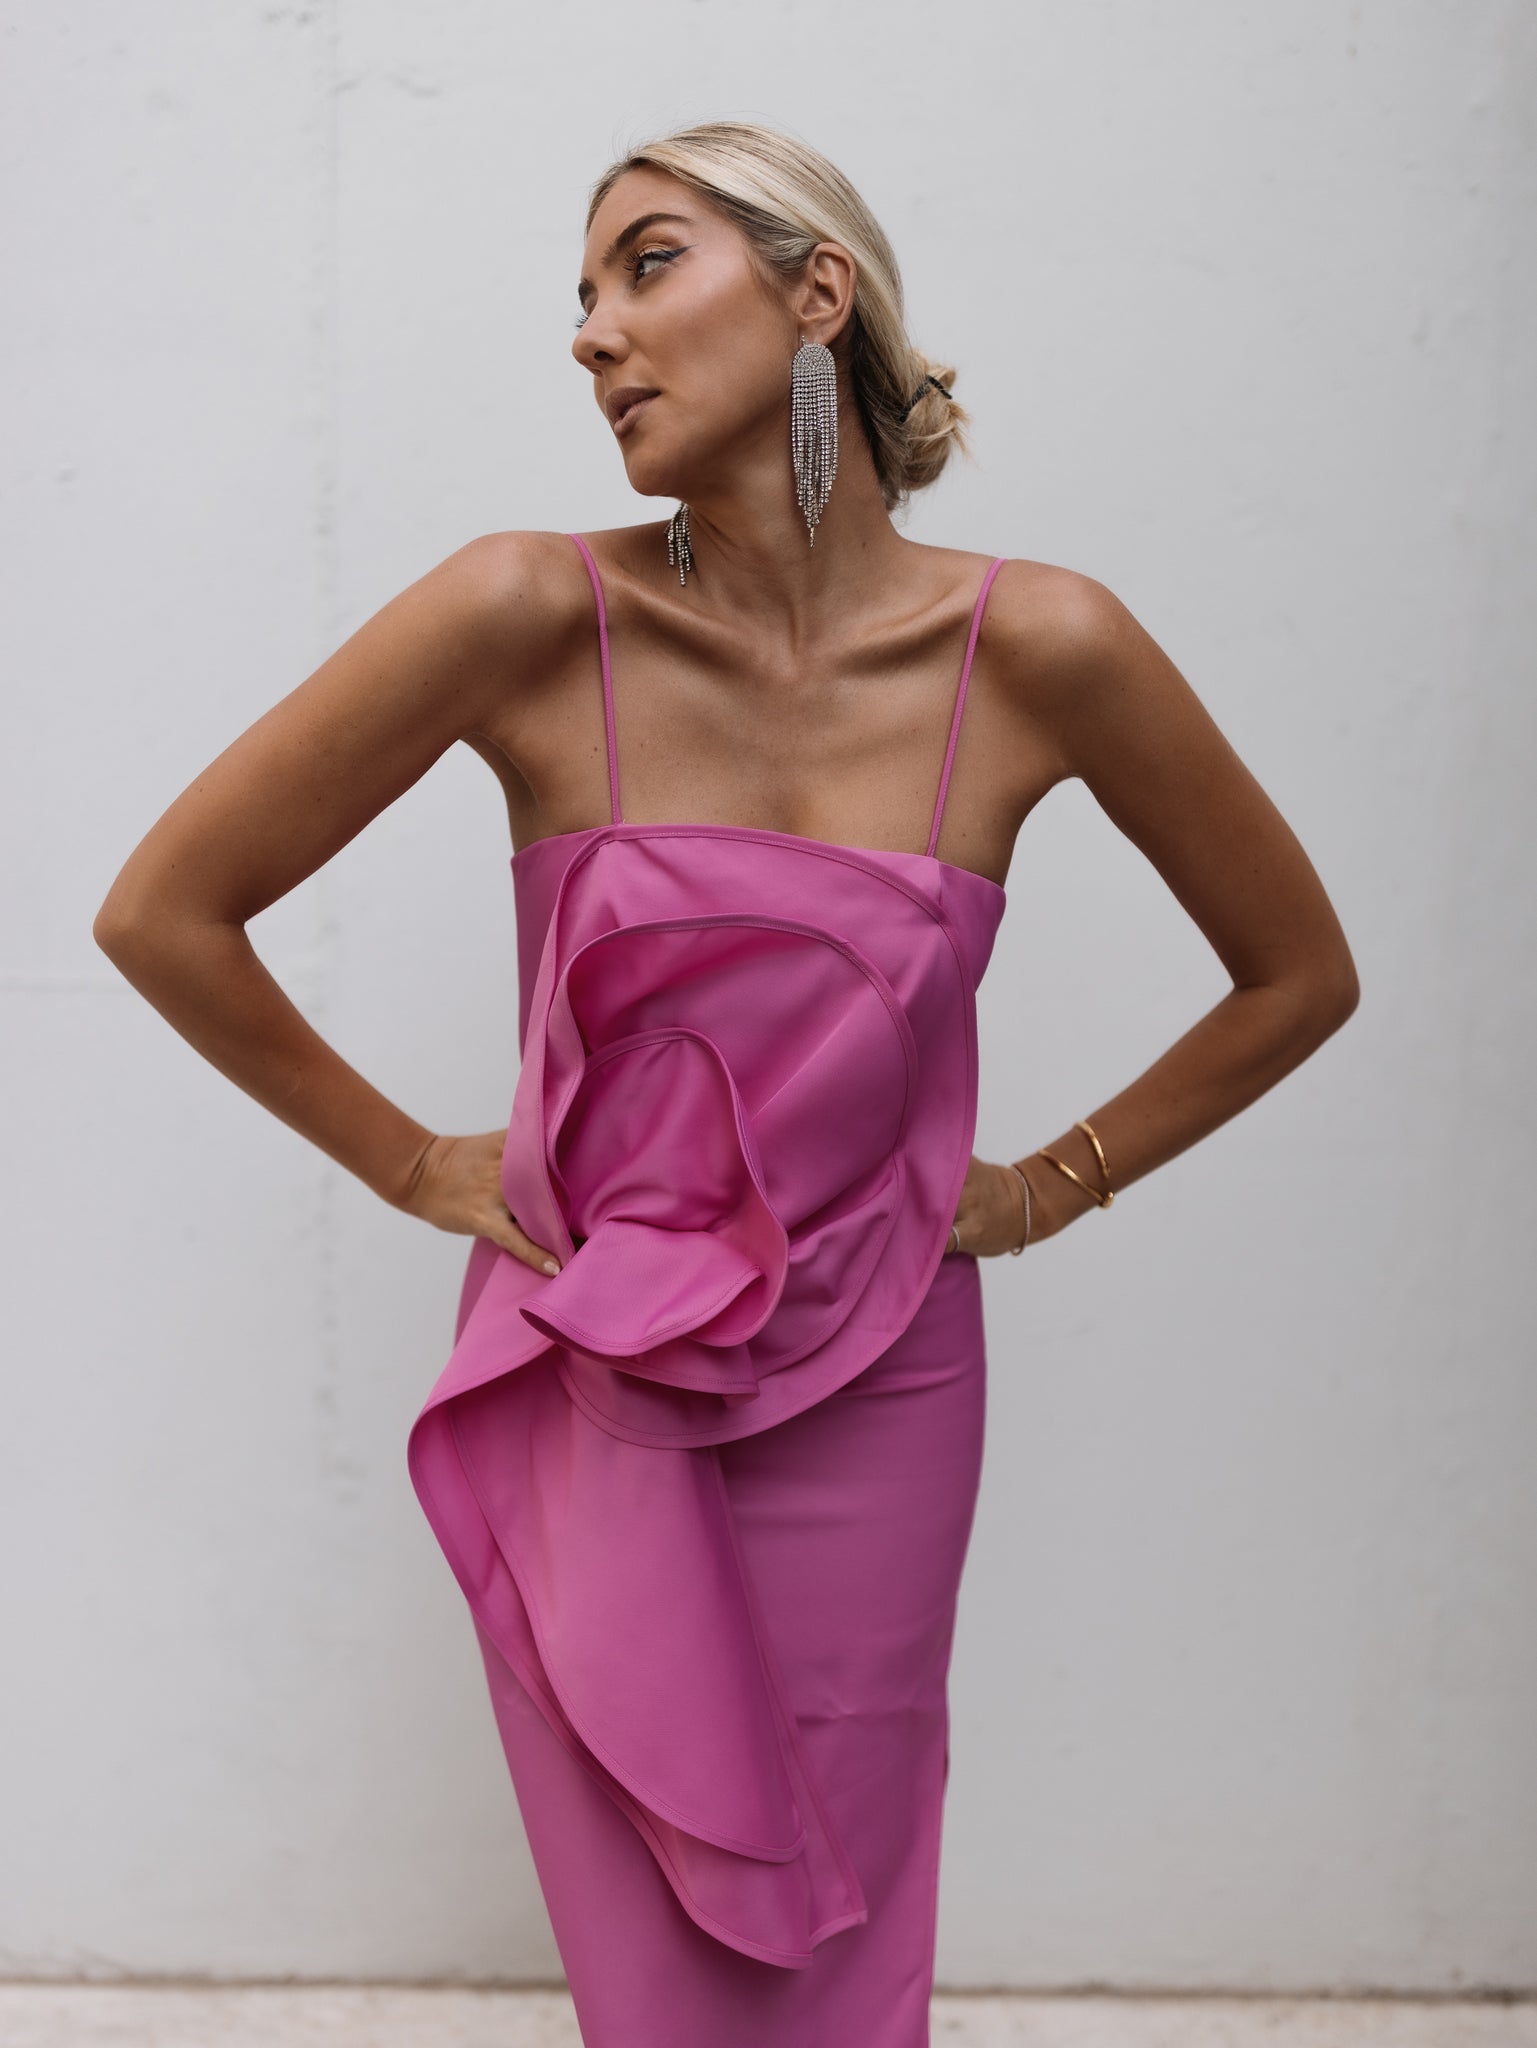 Vanessa pink dress